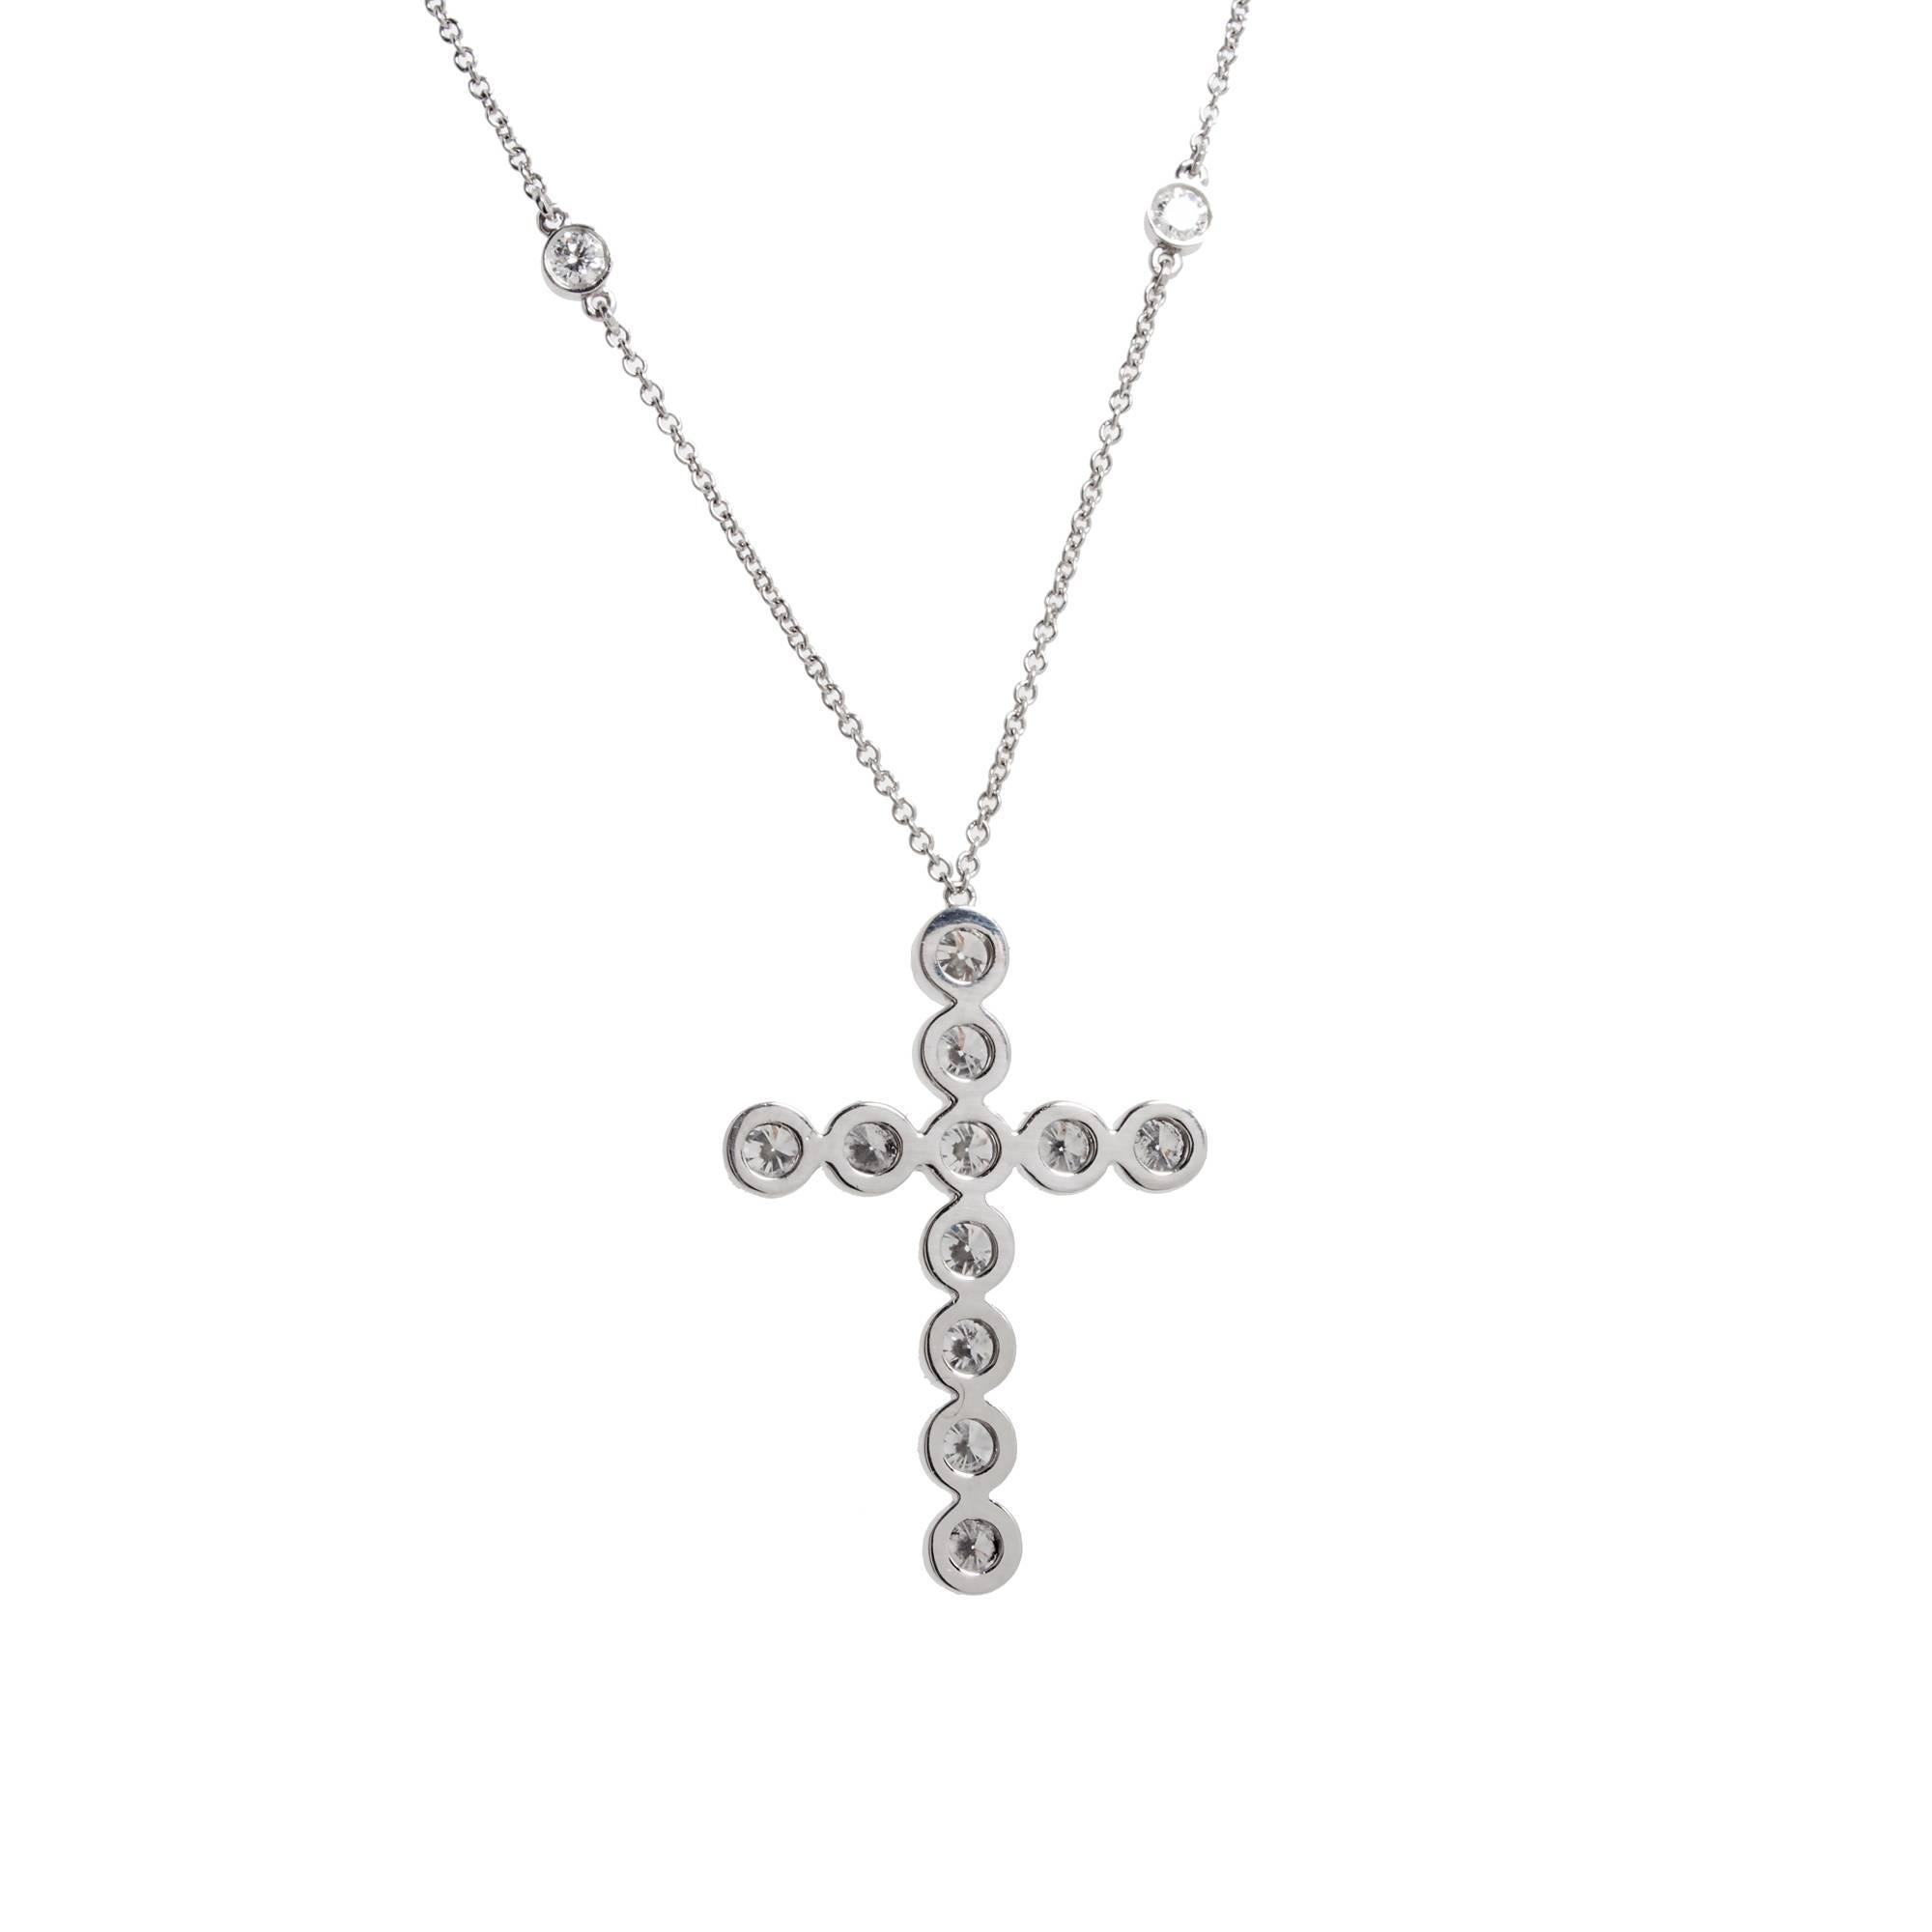 Authentic Tiffany & Co. Jazz Cross Diamond Pendant in Platinum

11 round diamonds F to G VS1 approx total weight 1.10cts
10 round diamonds F to G VS1 approx total weight .60 cts
Platinum
Stamped: Pt 950
Tested: Platinum
Hallmark: Tiffany &